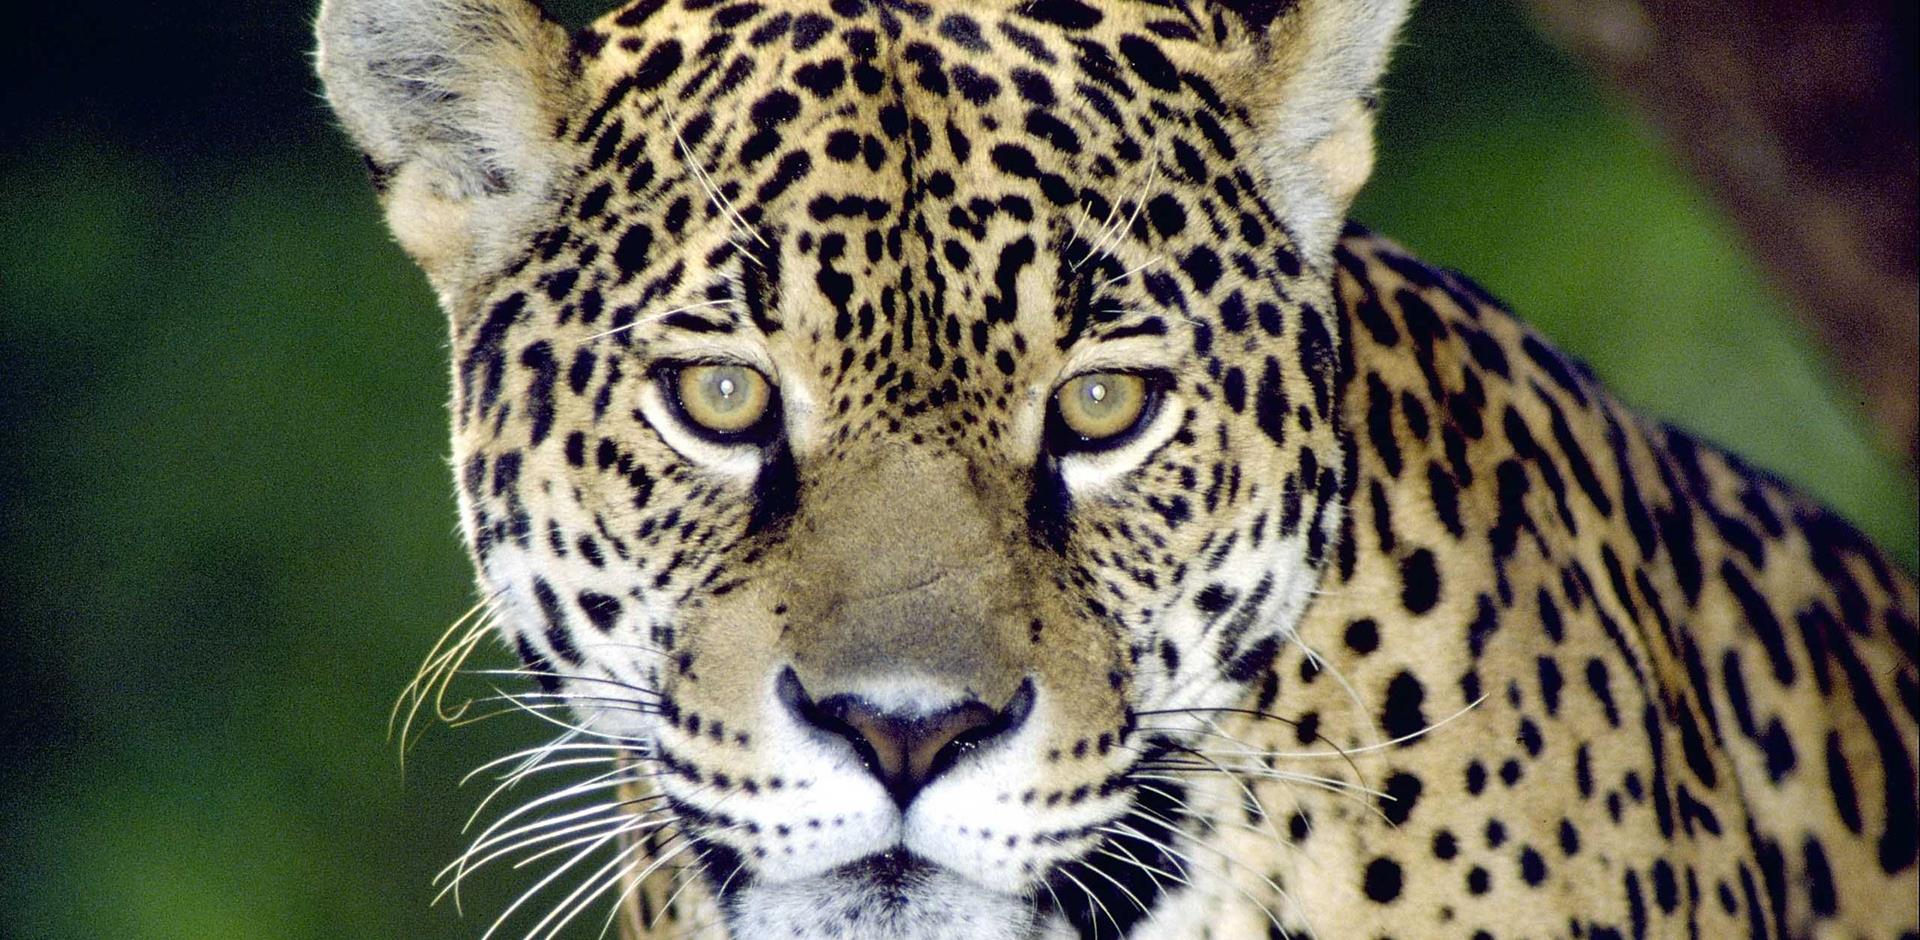 Jaguar, the Pantanal, South America